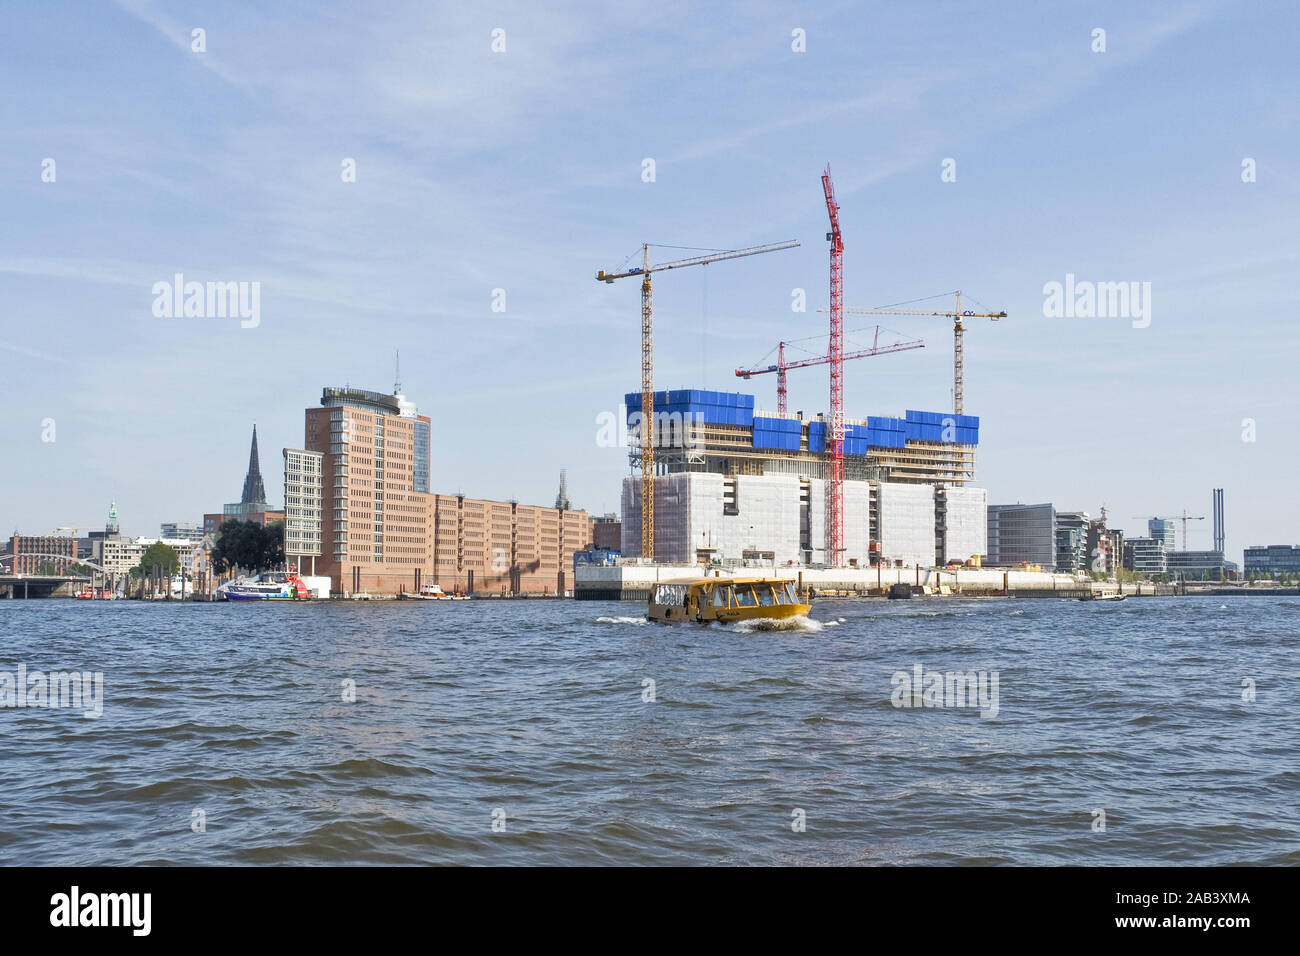 Blick auf die entstehende Elbphilharmonie im Hamburger Hafen |Visualizza delle emergenti Elbe Philharmonic Hall nel porto di Amburgo| Foto Stock